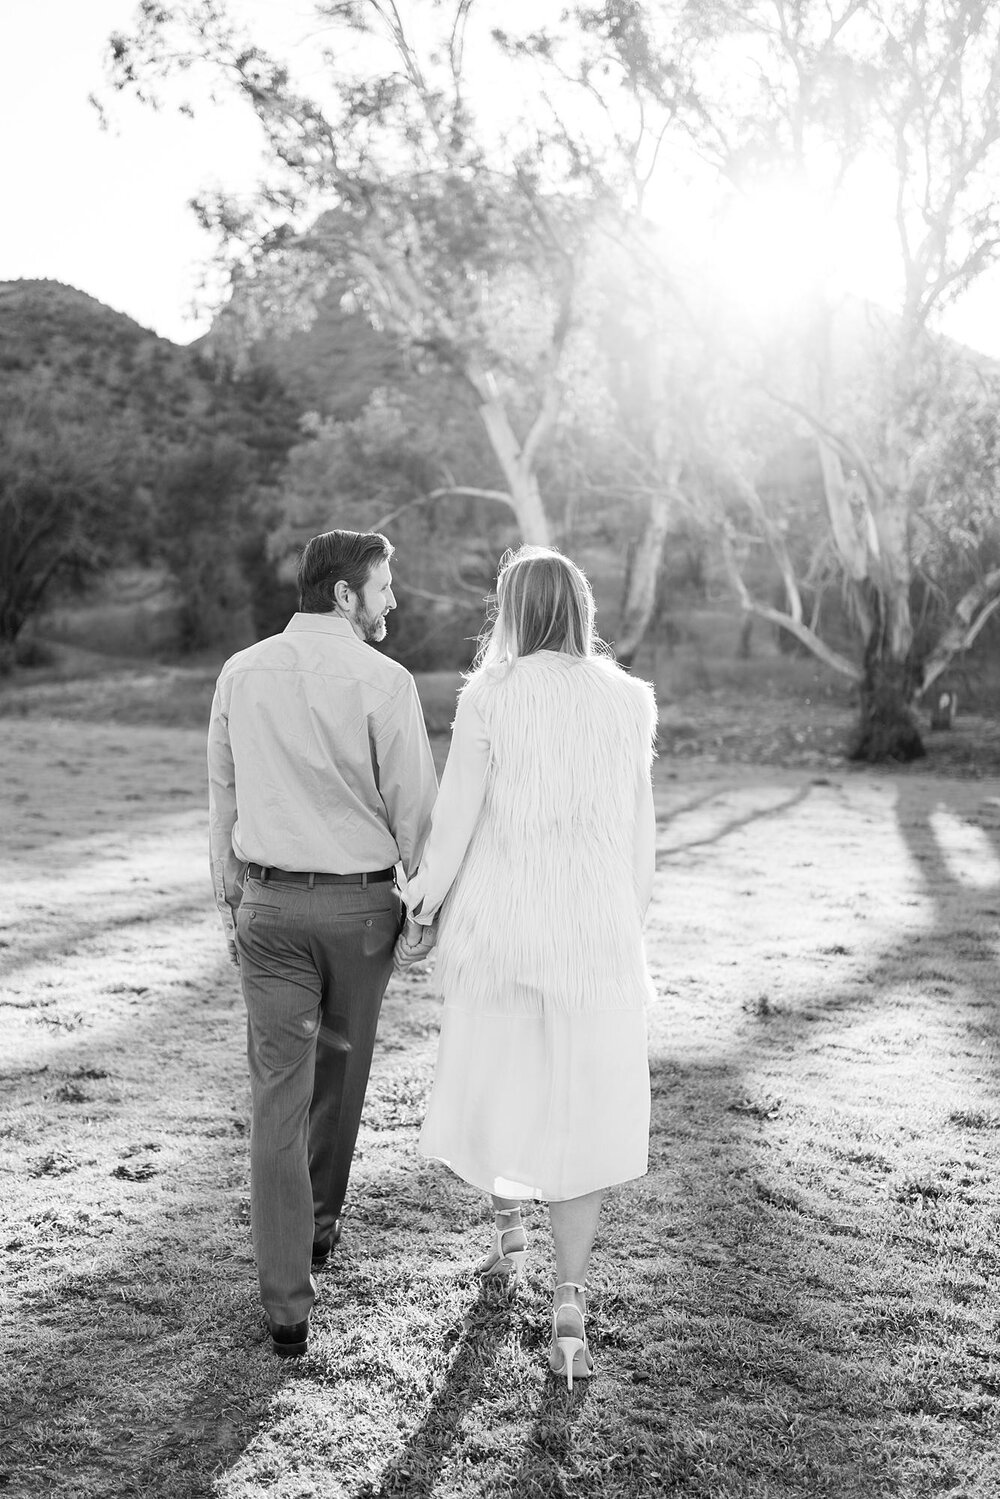 Paramount Ranch Engagement Session | Miki & Sonja Photography | mikiandsonja.com